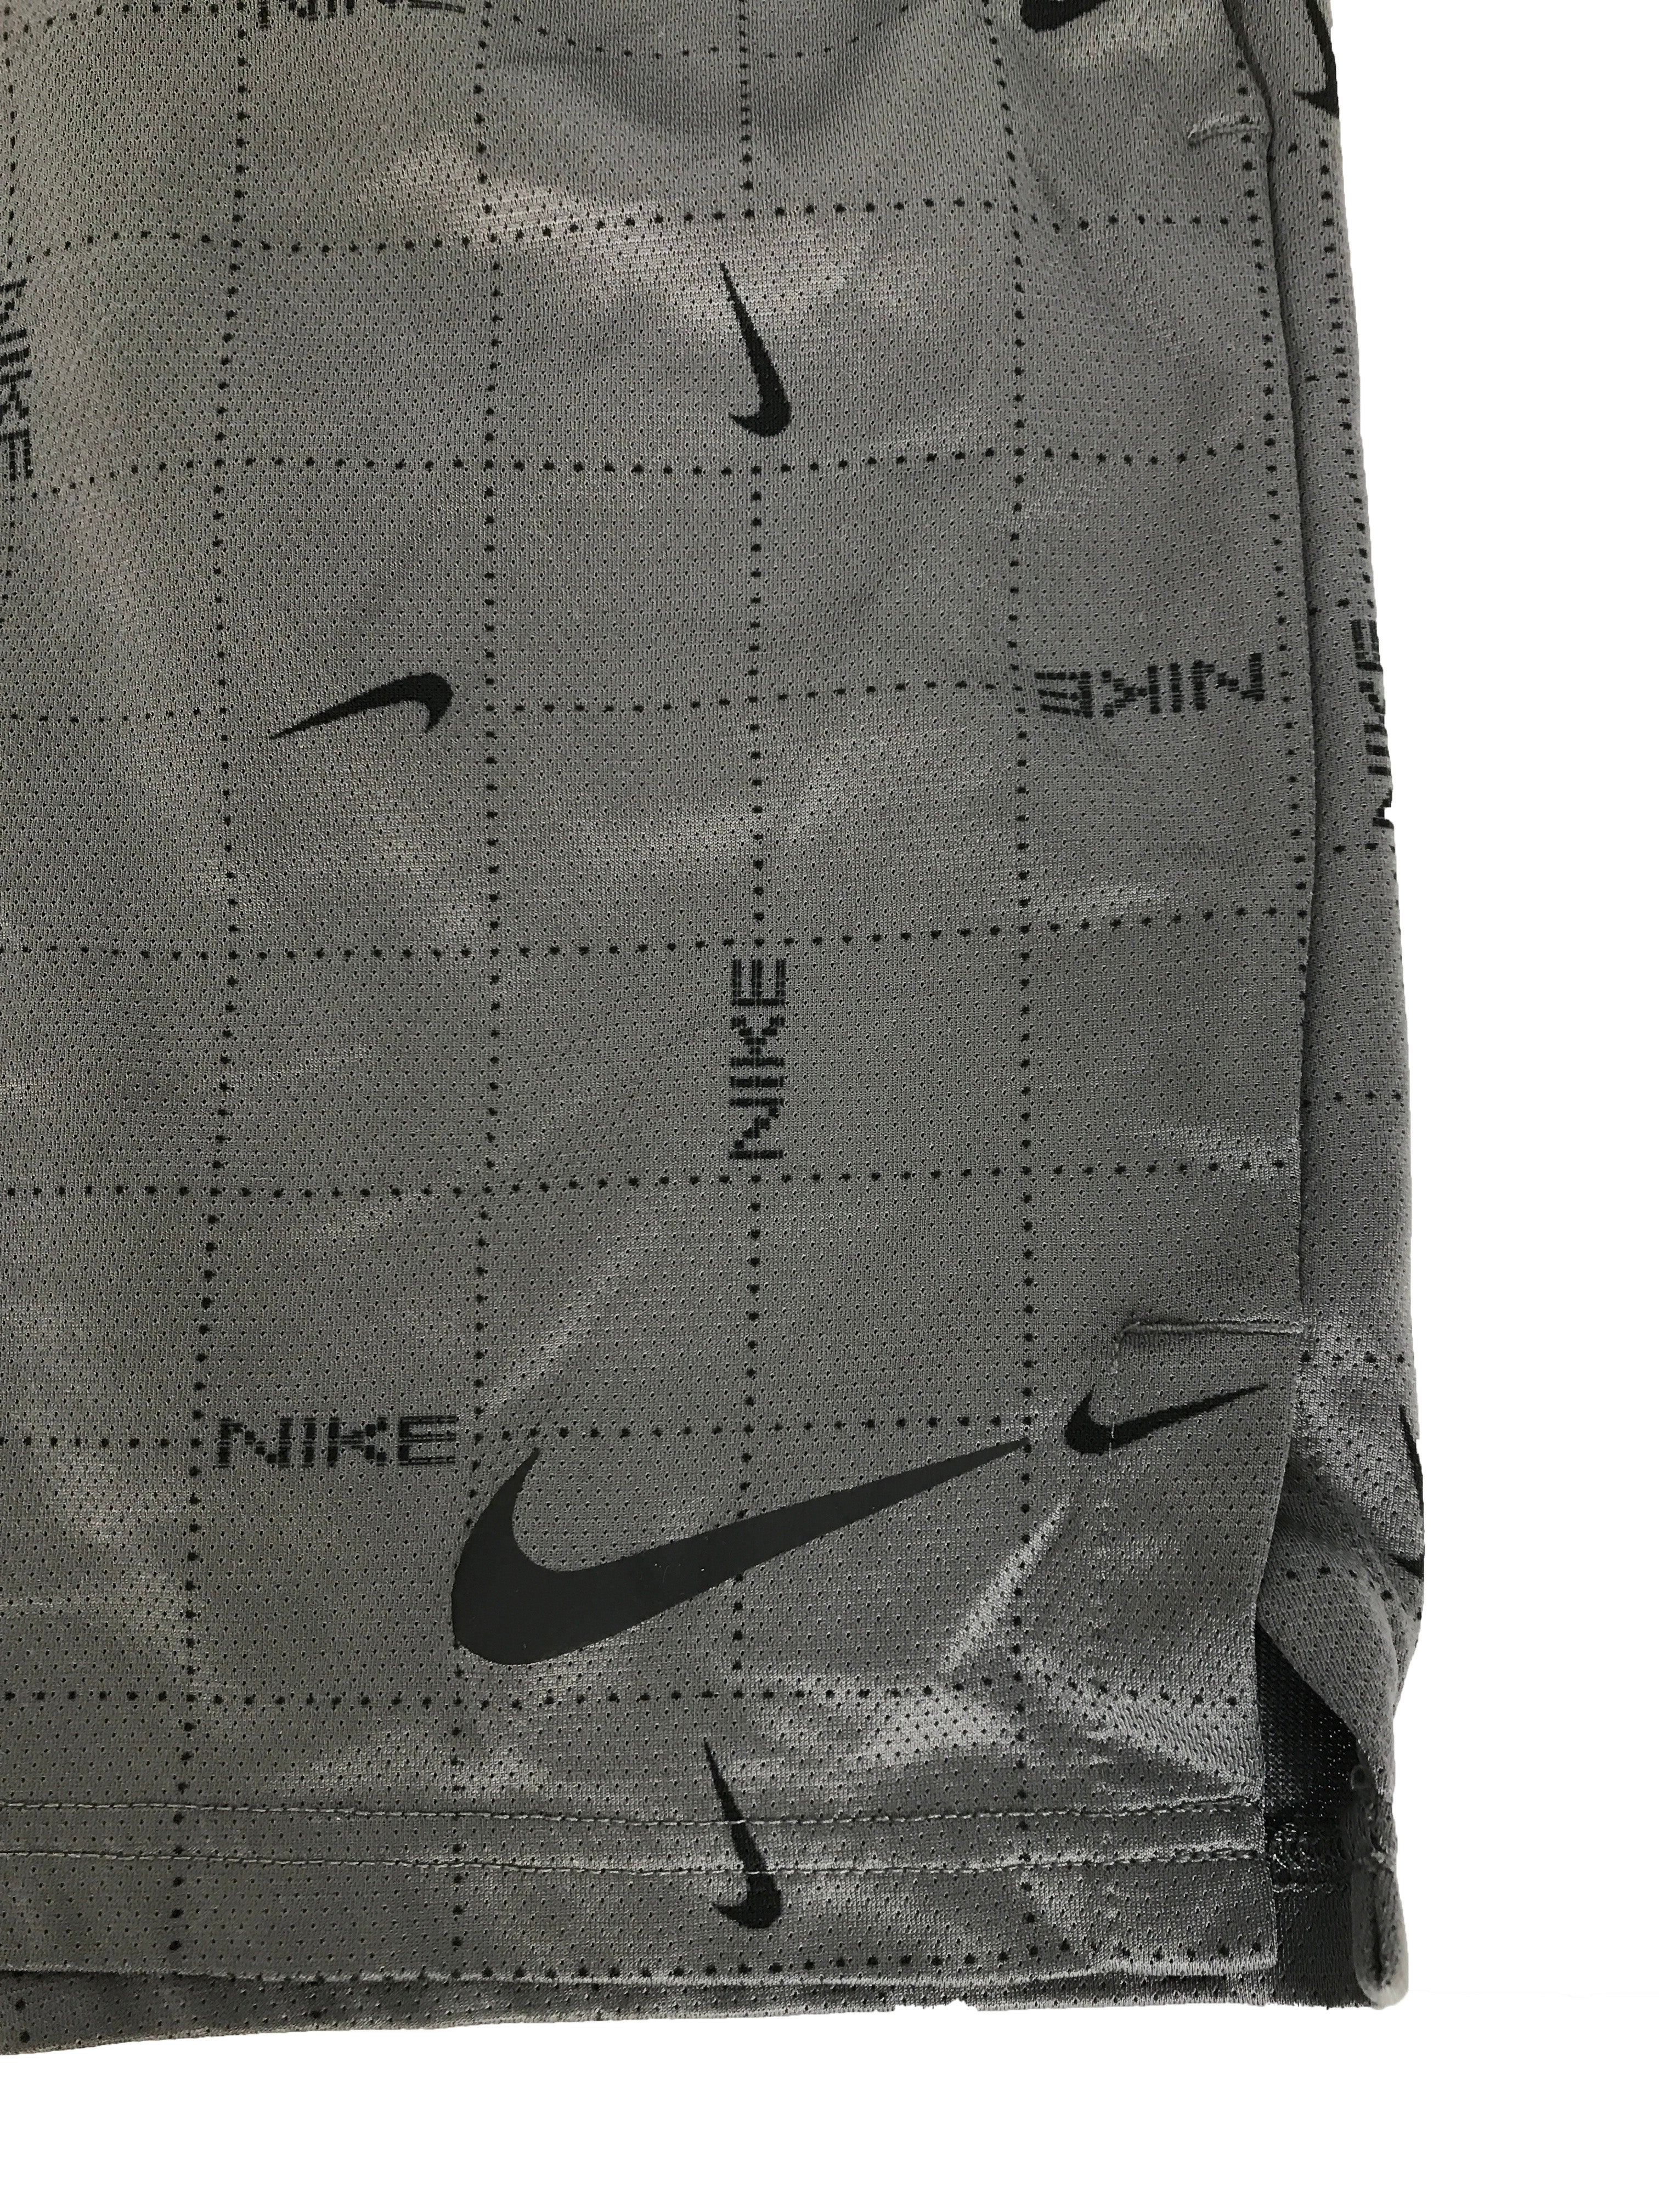 Nike Gray Shorts Men's Size M